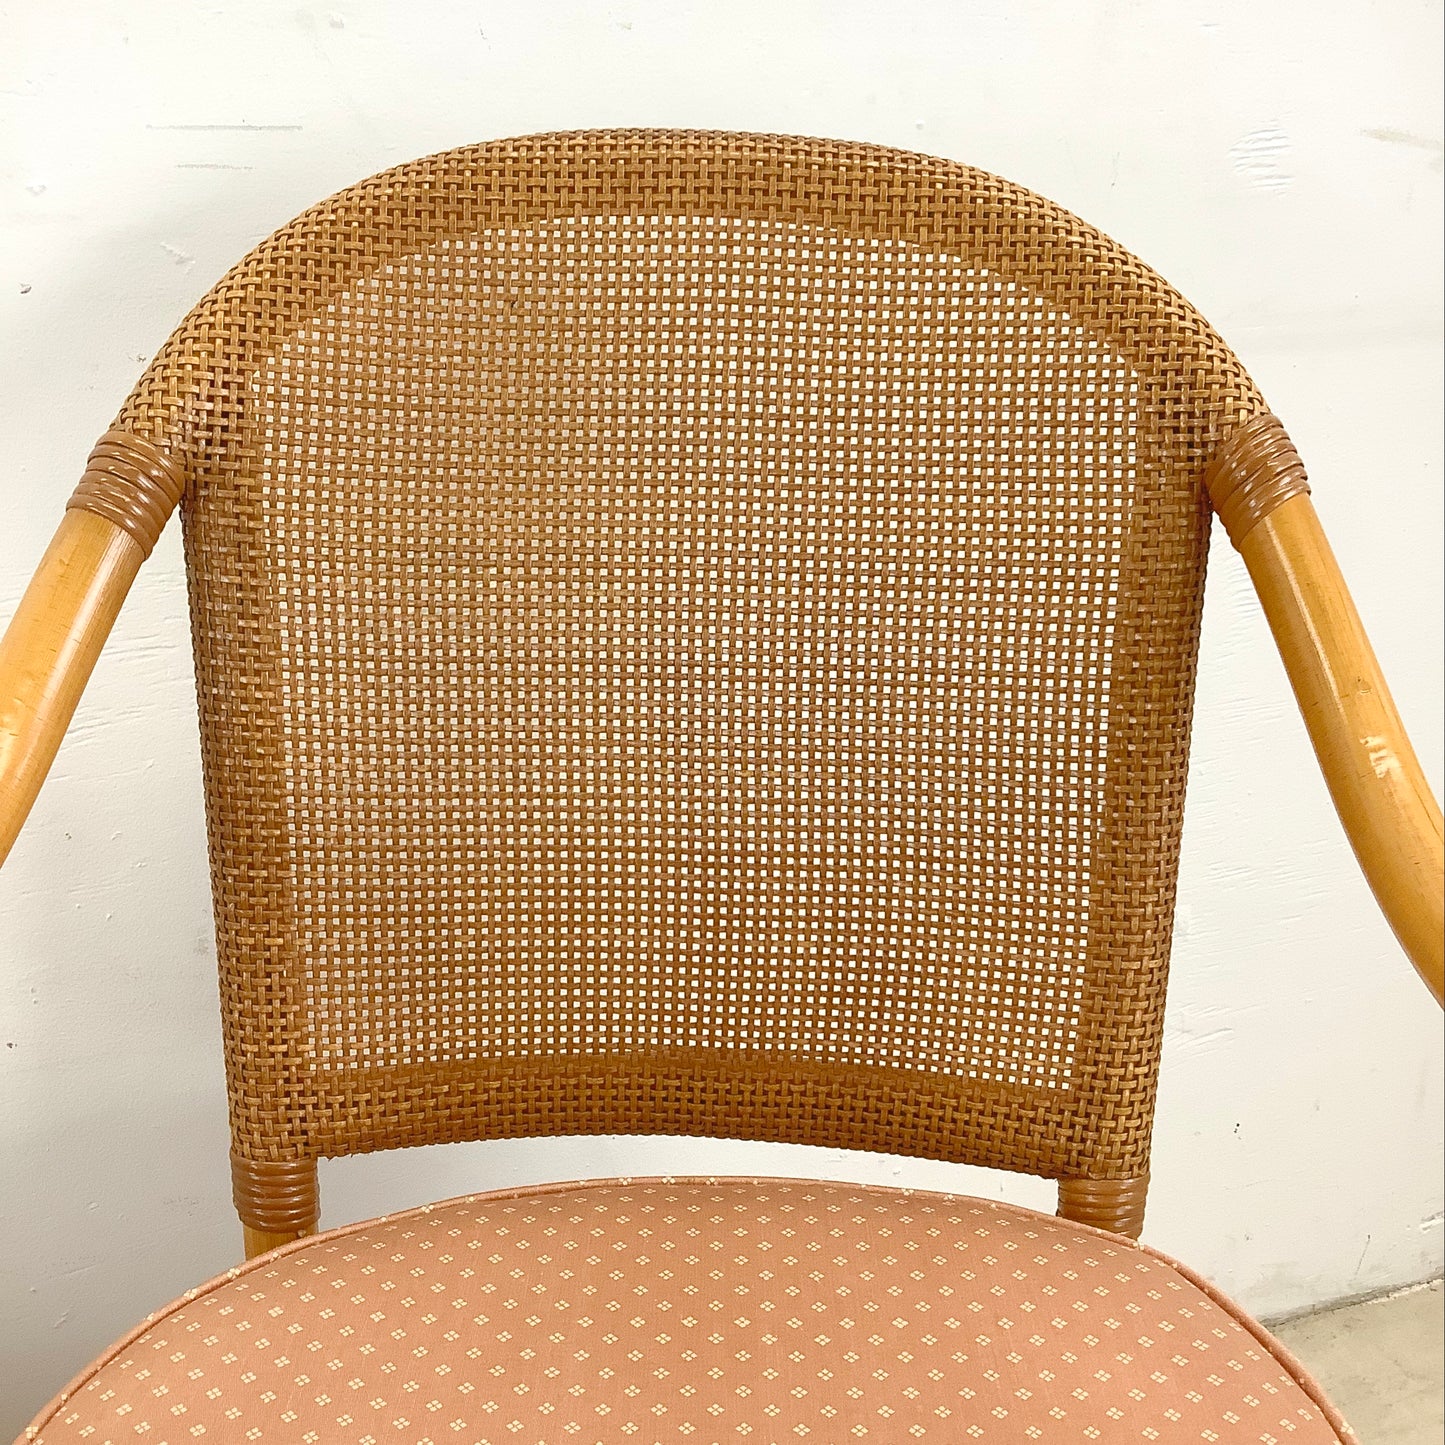 Vintage Modern Rattan Swivel Chairs- Four